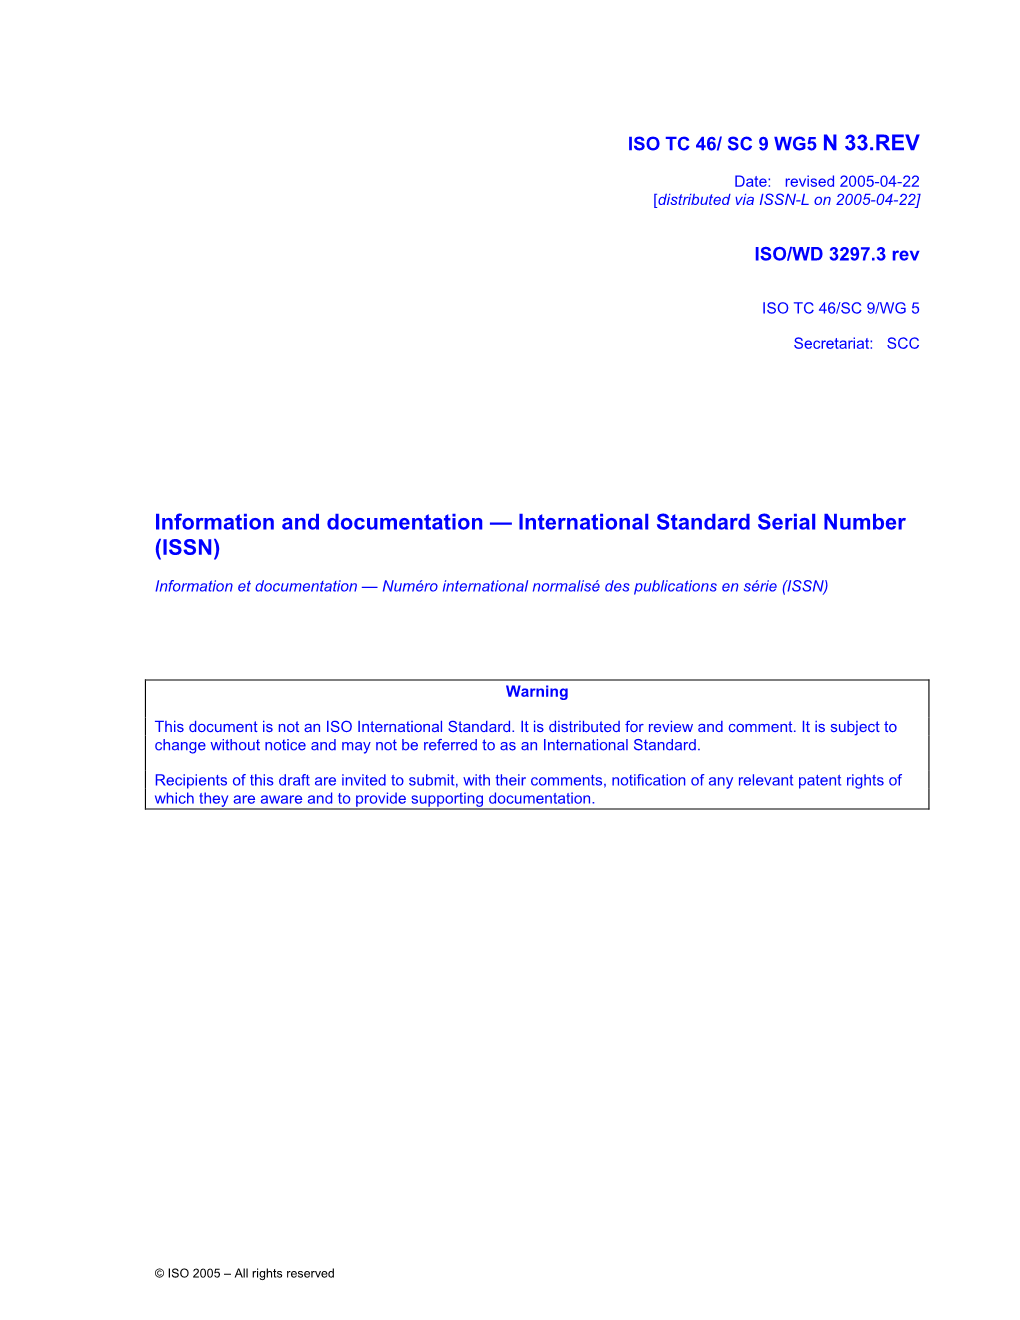 International Standard Serial Number (ISSN)